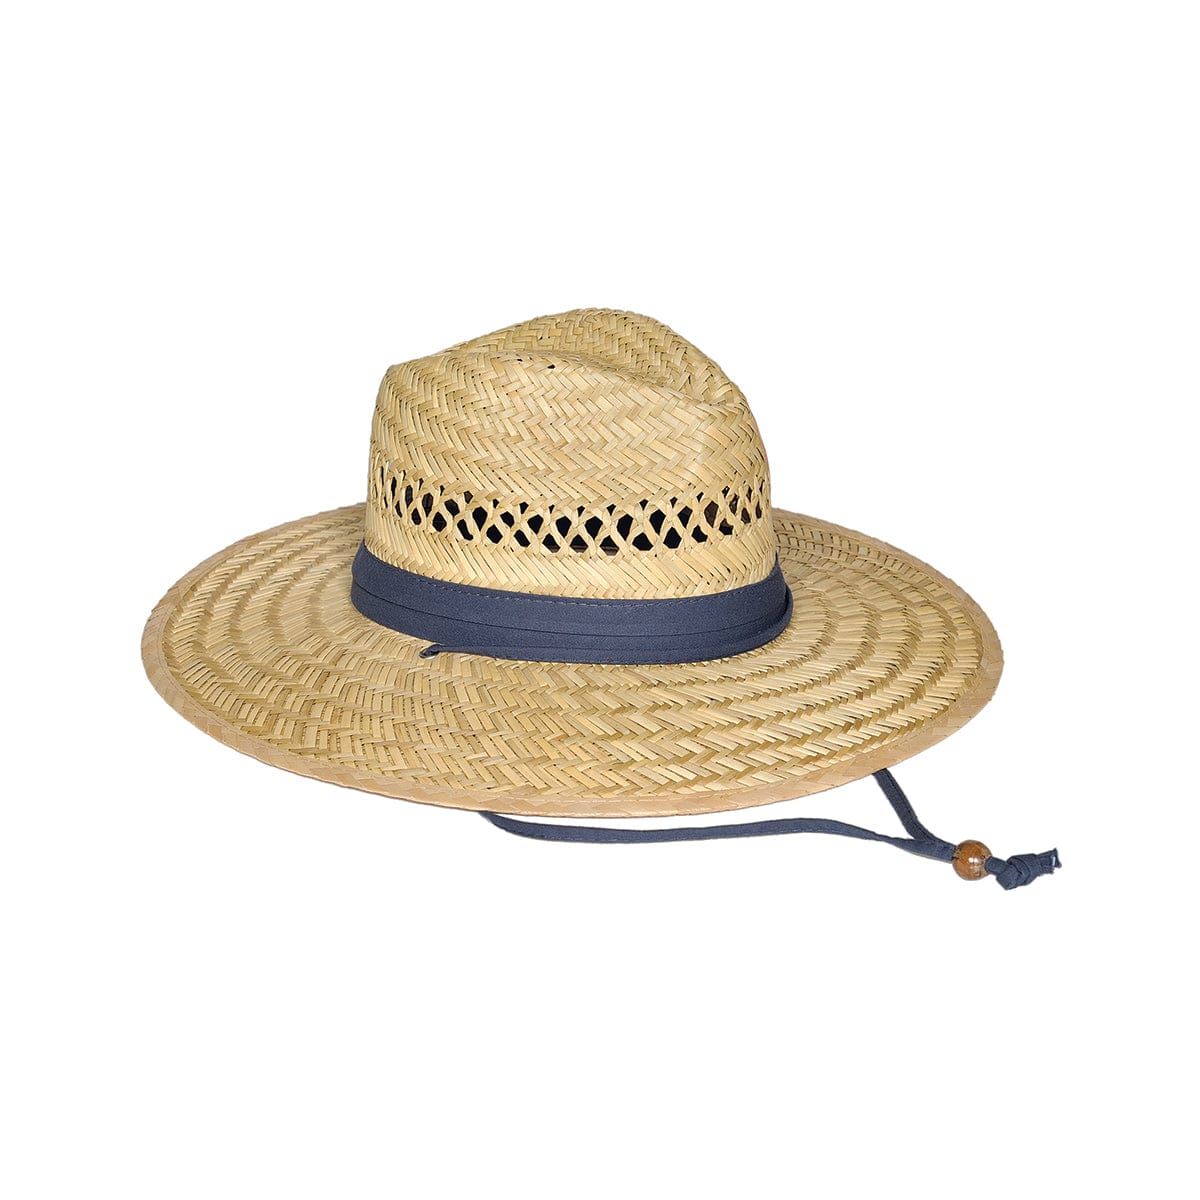 Rush Straw Safari Hat by Gempler's